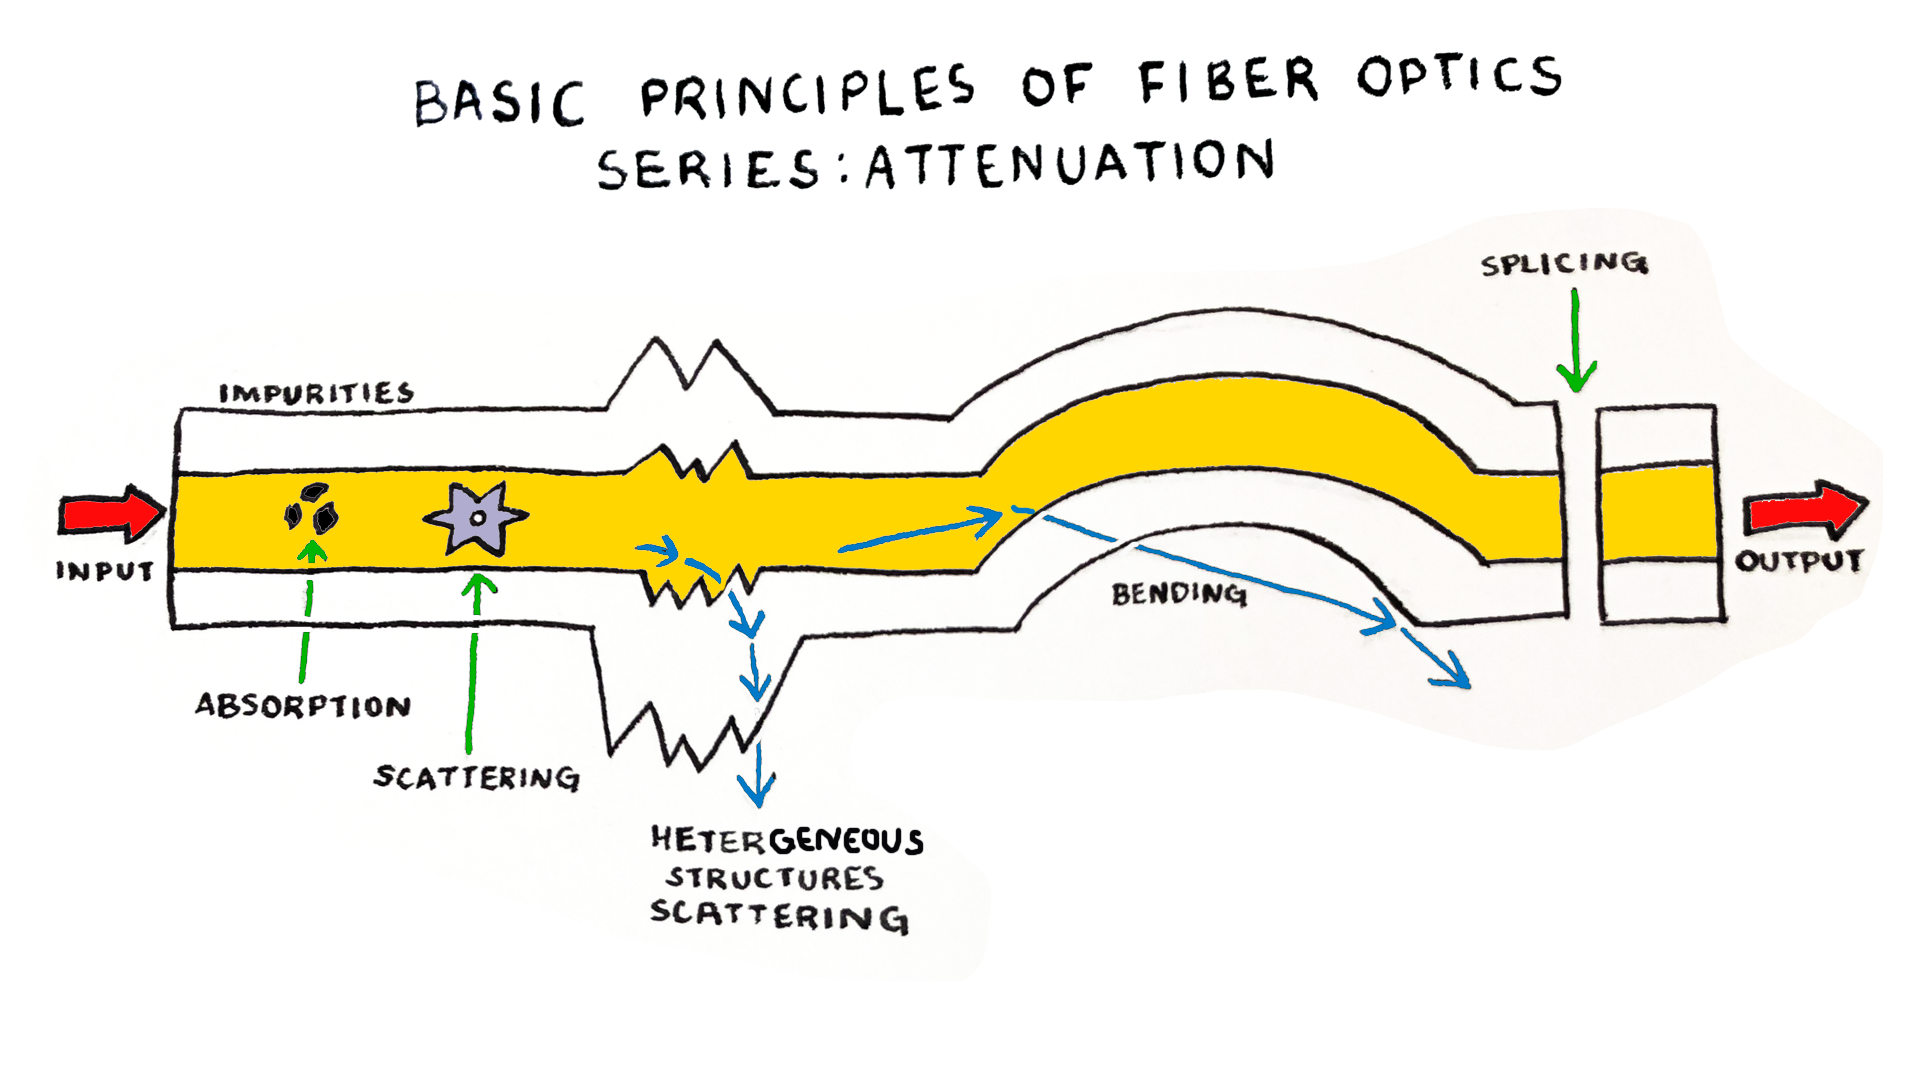 Basic Principles of Fiber Optics Series: Attenuation